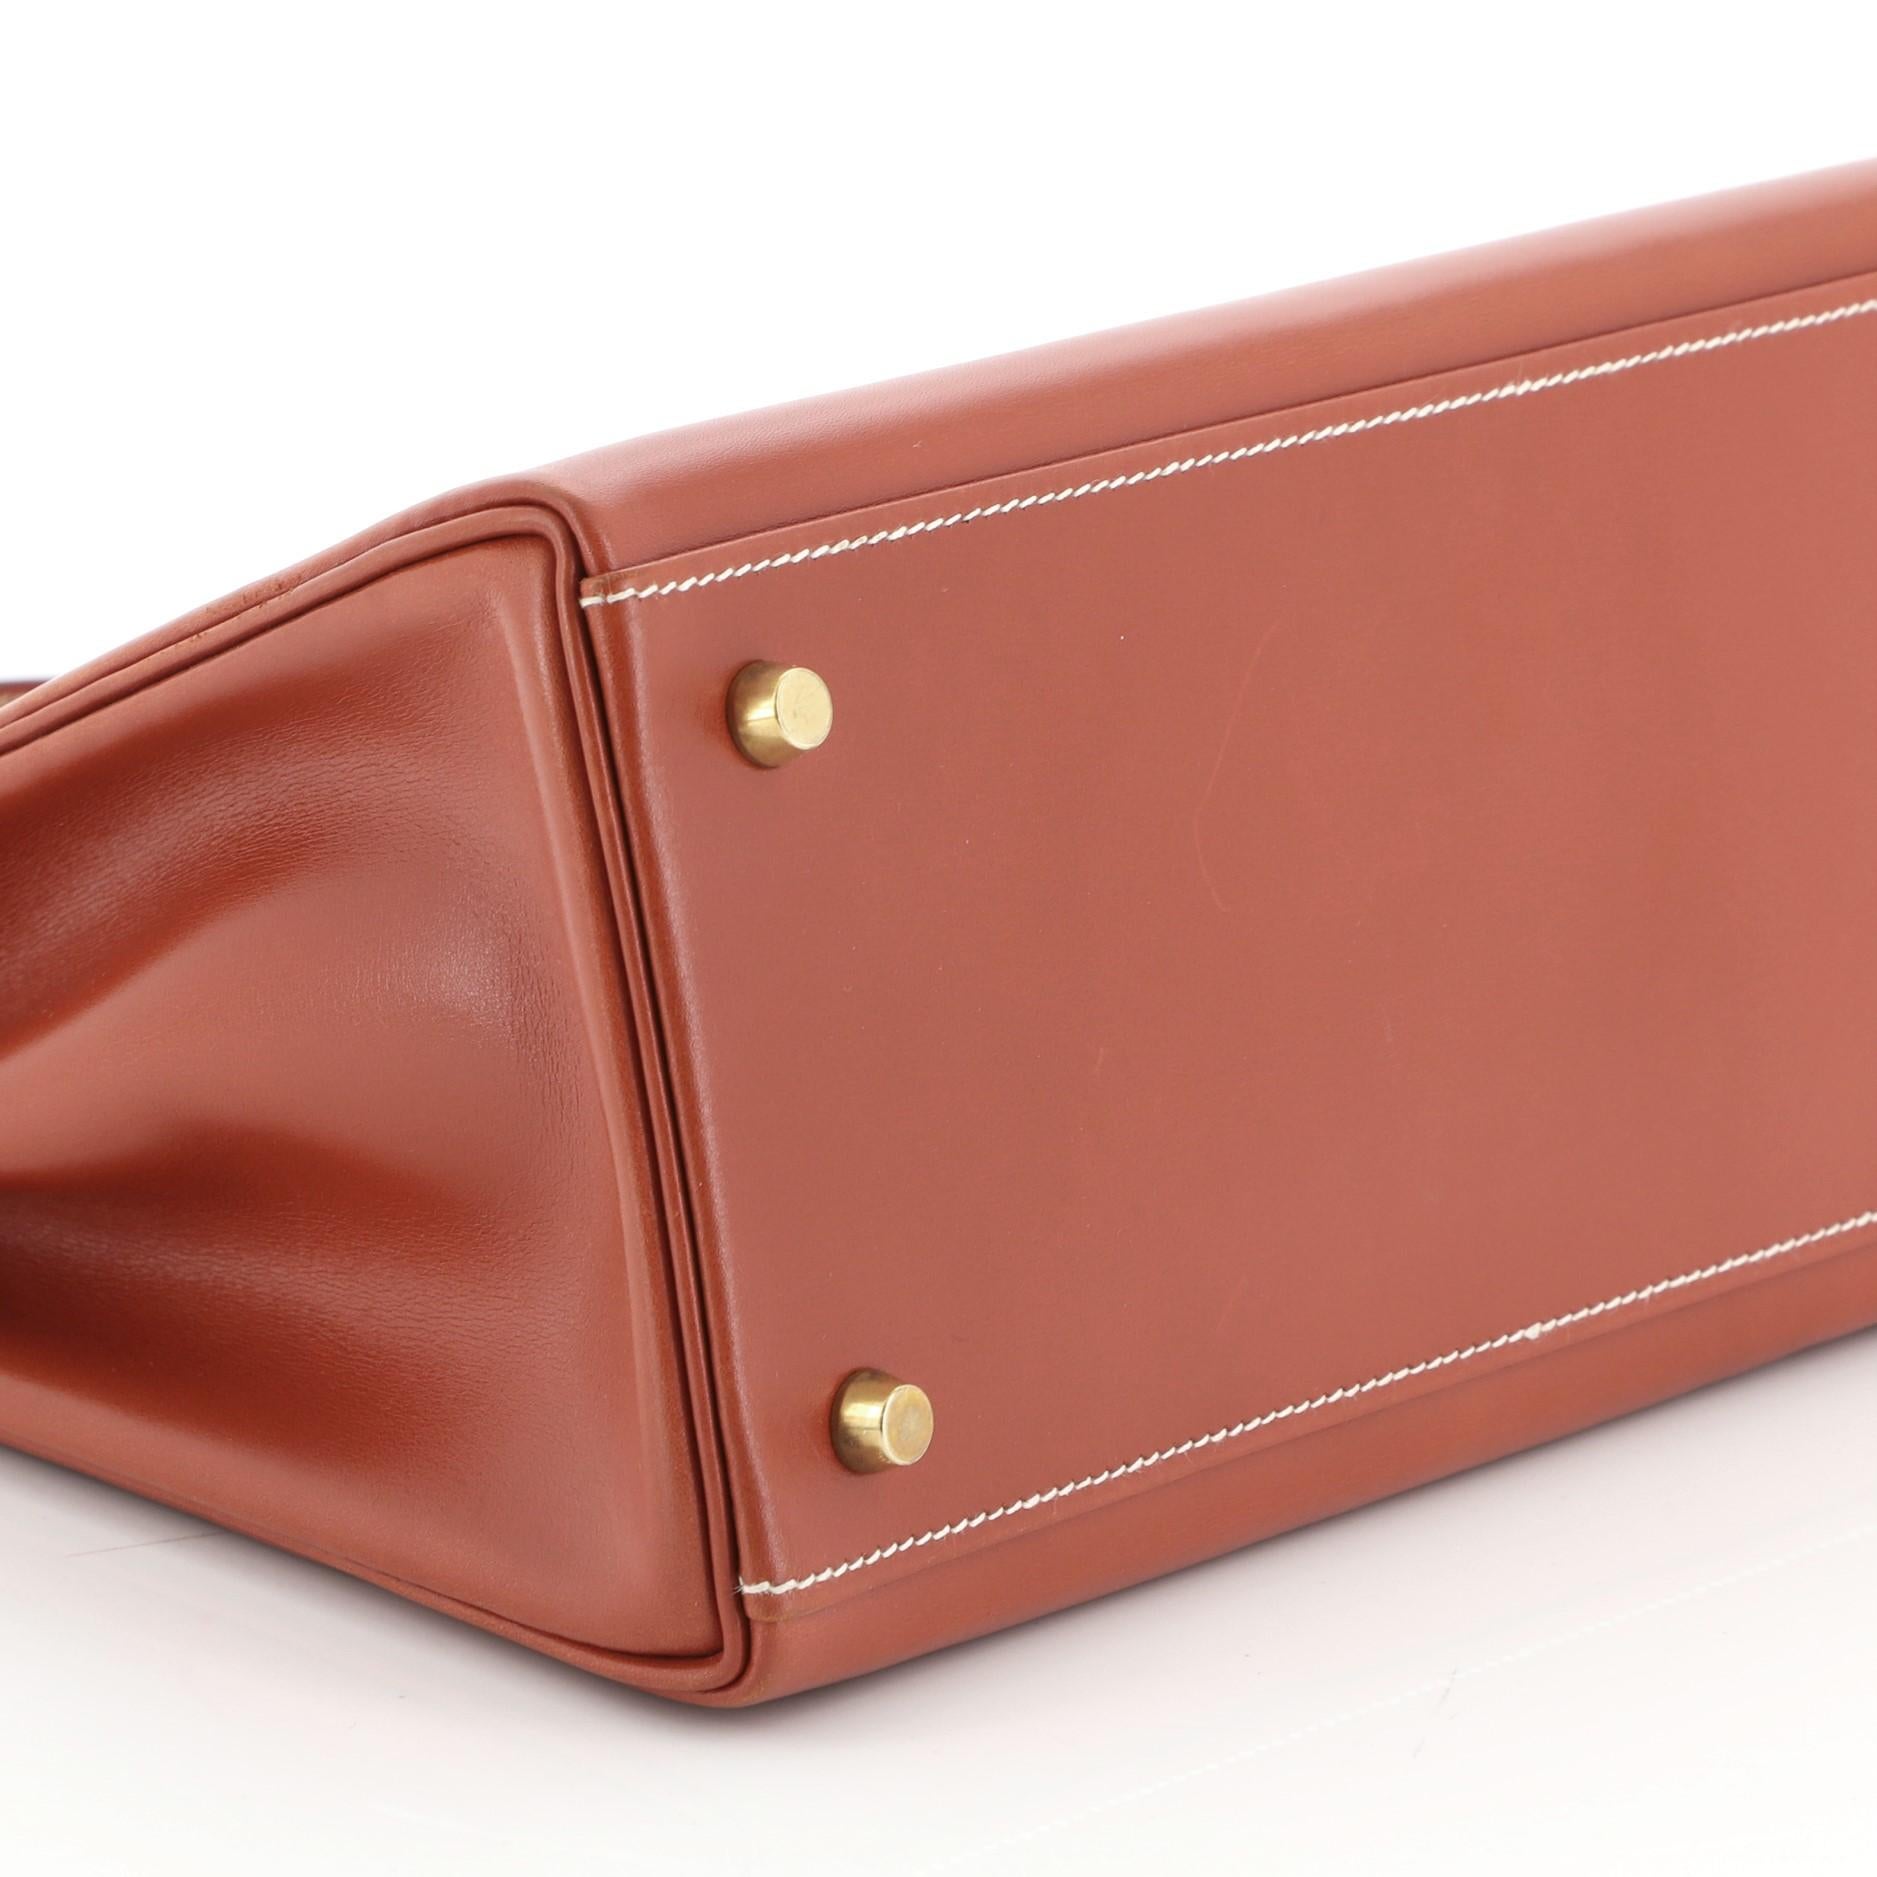 Hermes Kelly Handbag Brique Box Calf with Gold Hardware 35 1